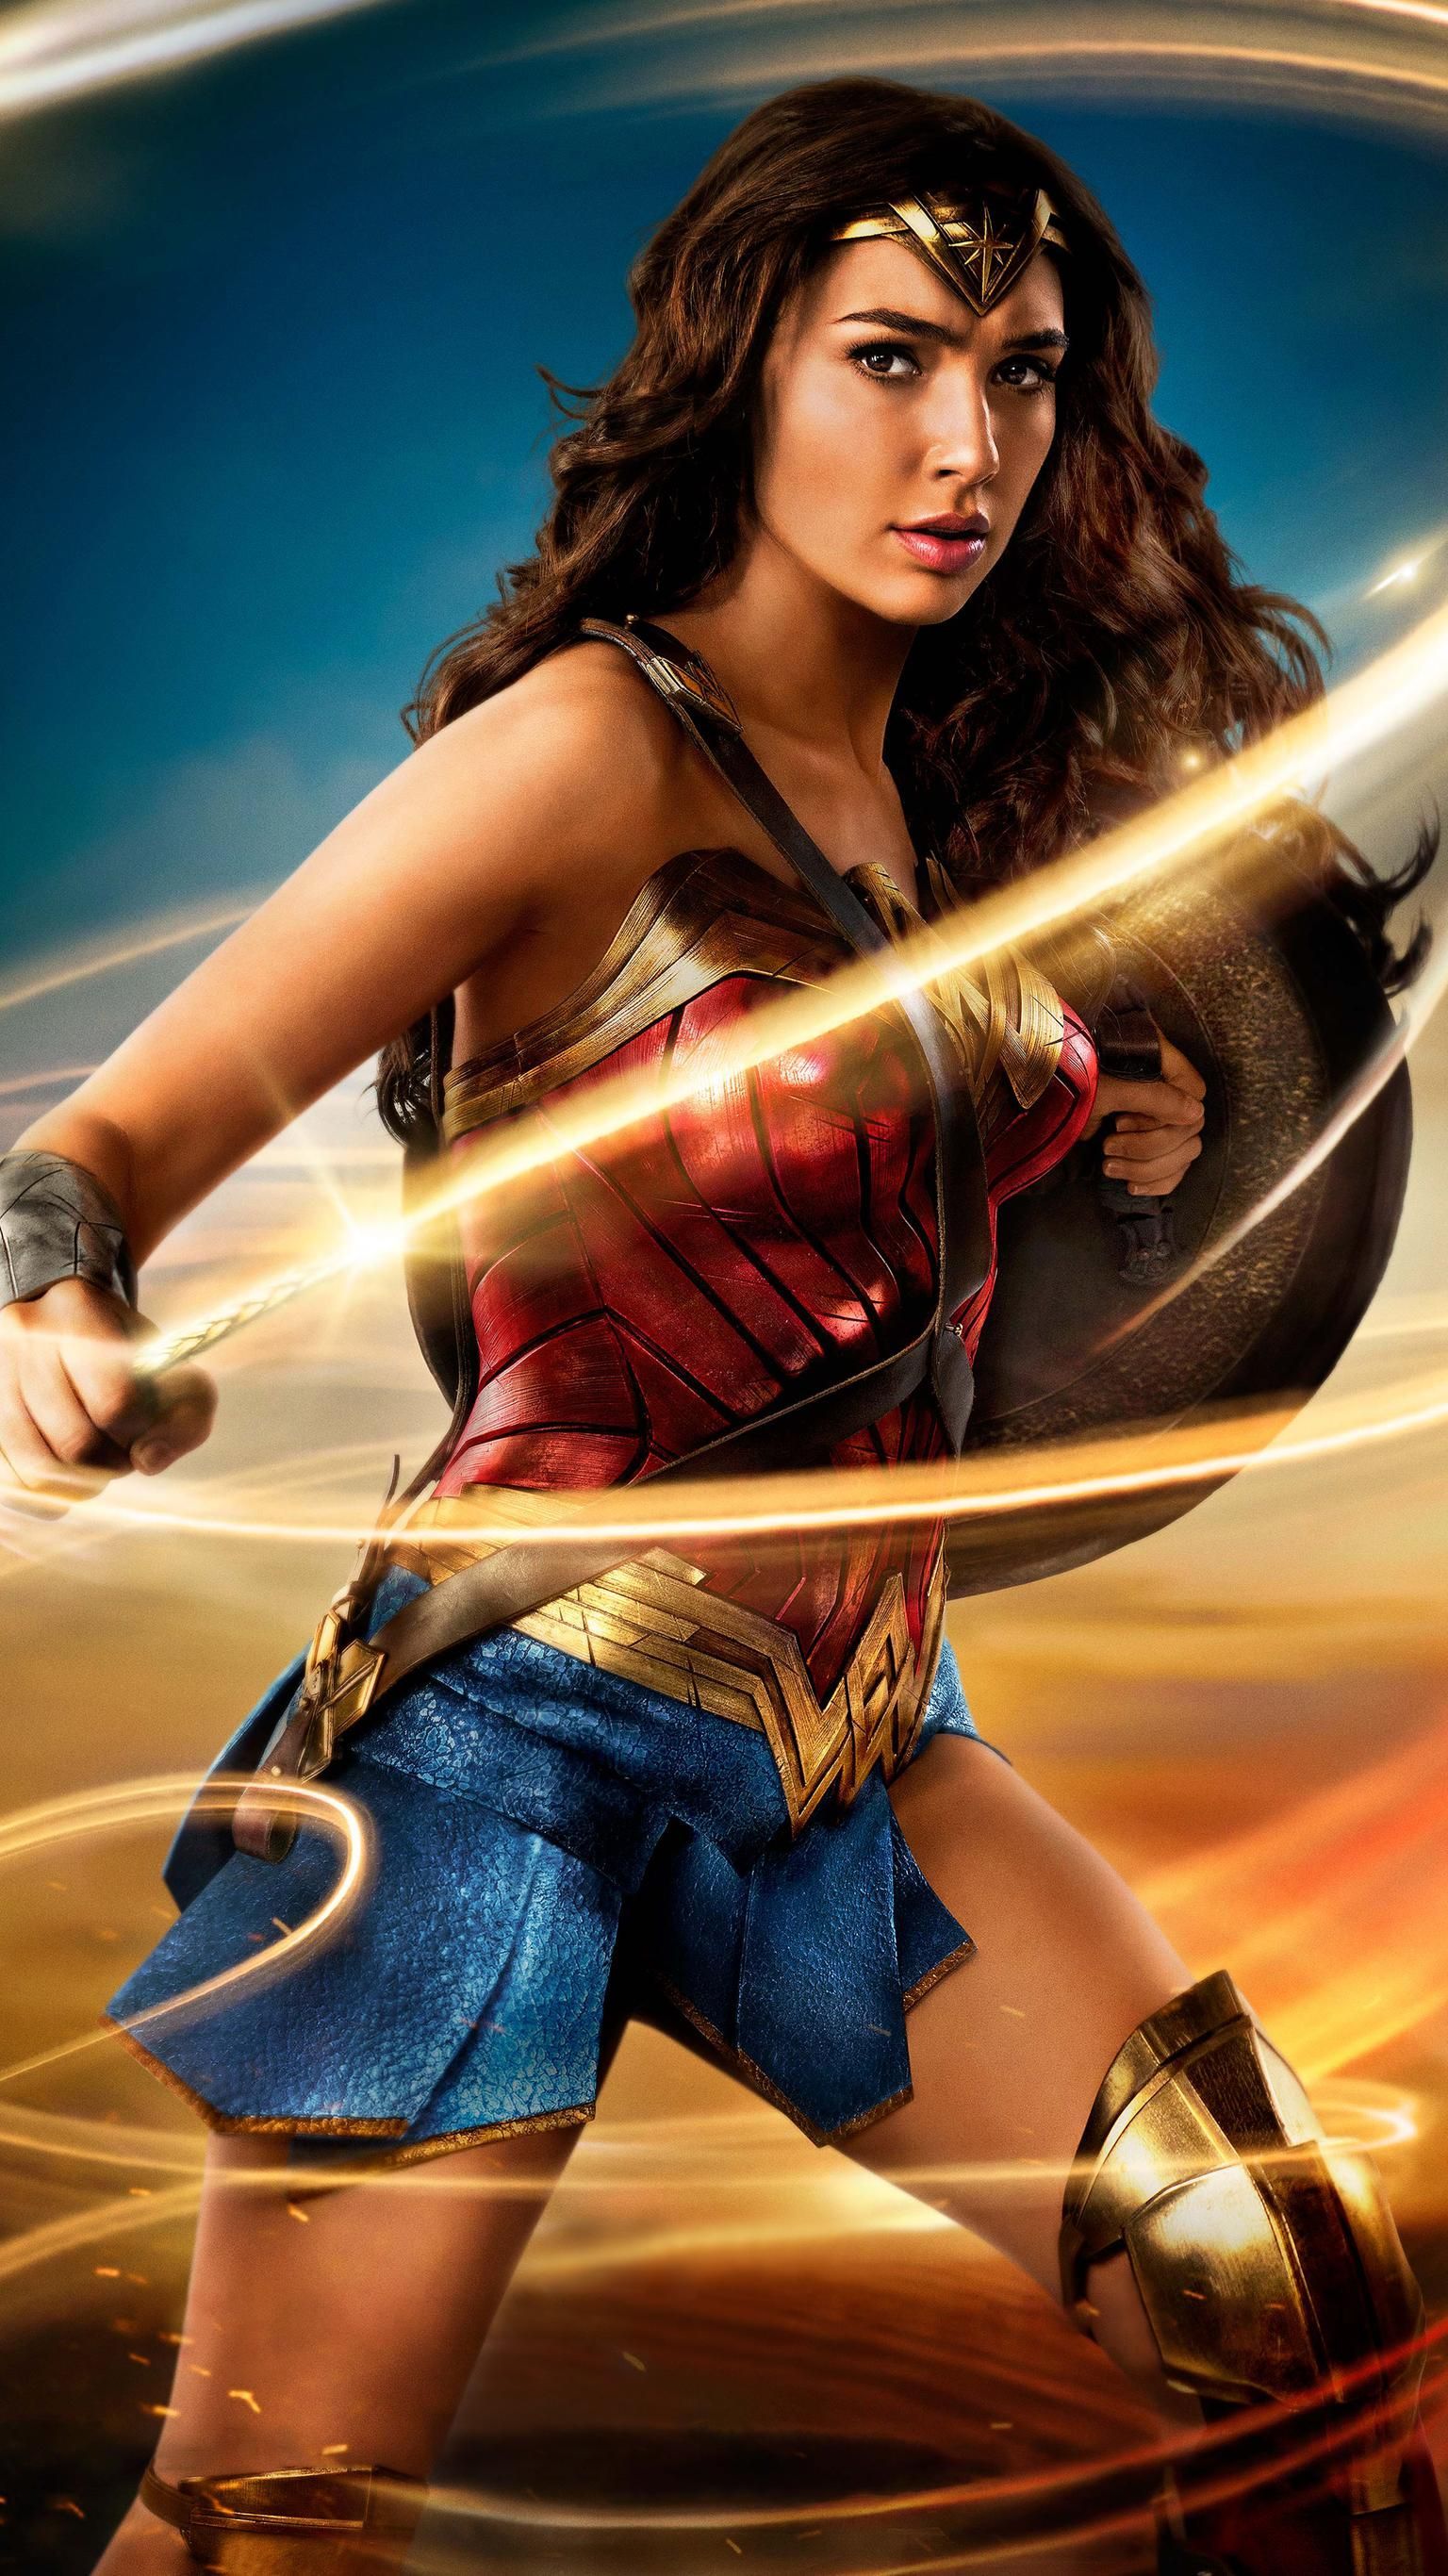 Wonder Woman (2017) Phone Wallpaper. Moviemania. Gal gadot wonder woman, Wonder woman movie, Wonder woman